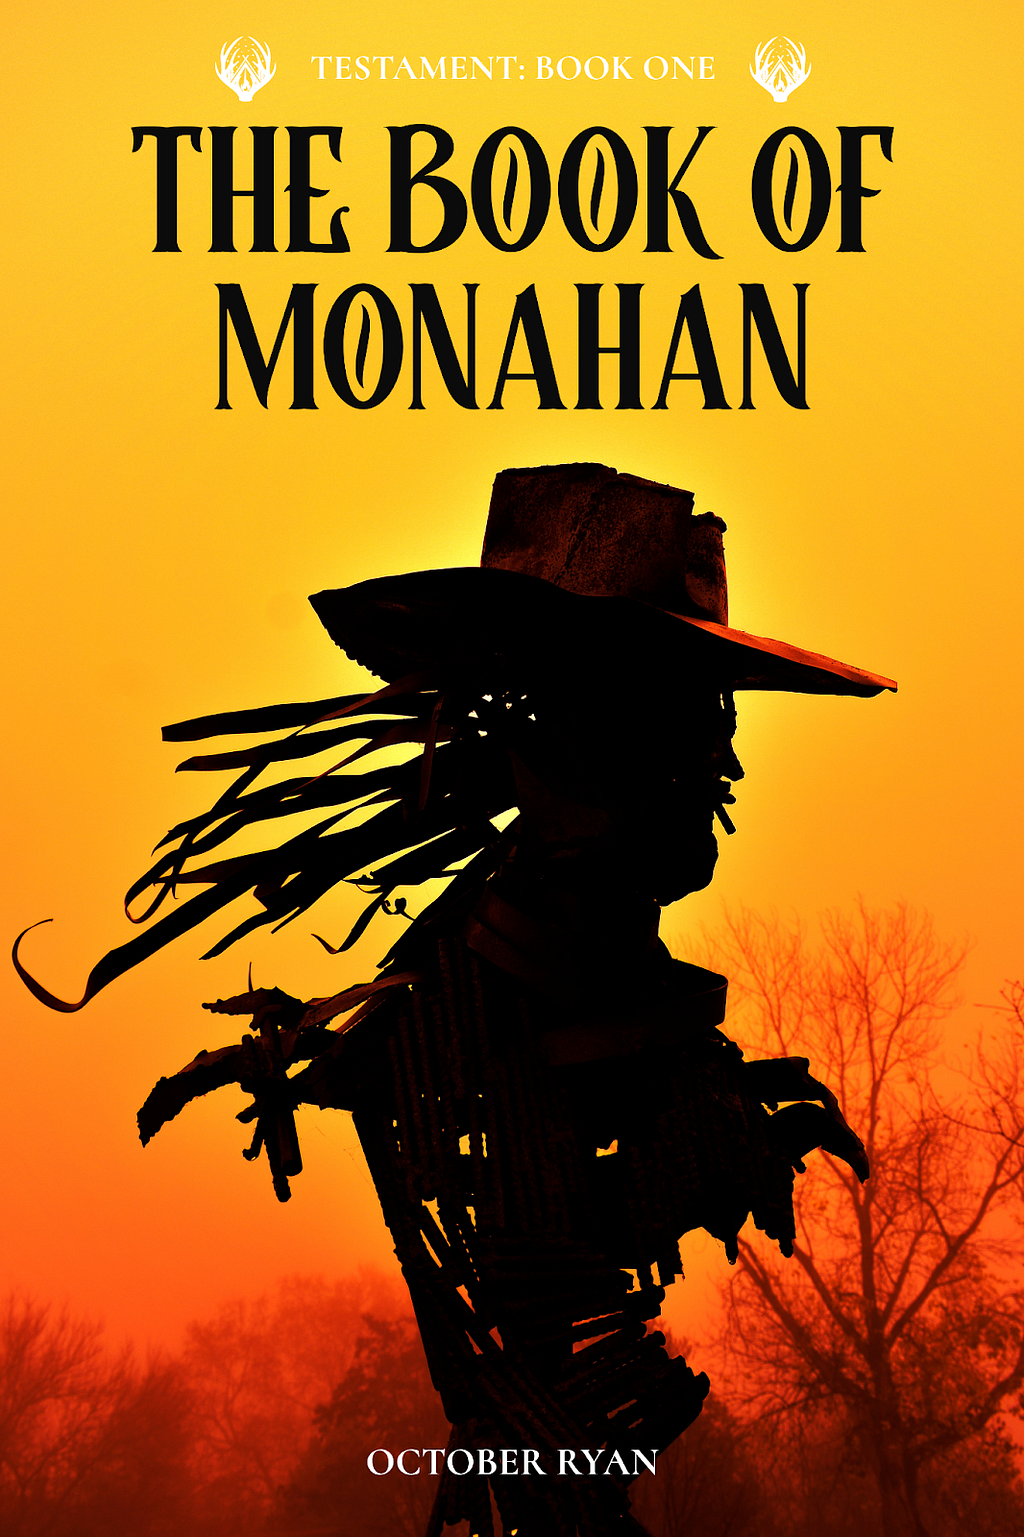 A cowboy scarecrow silhouette.